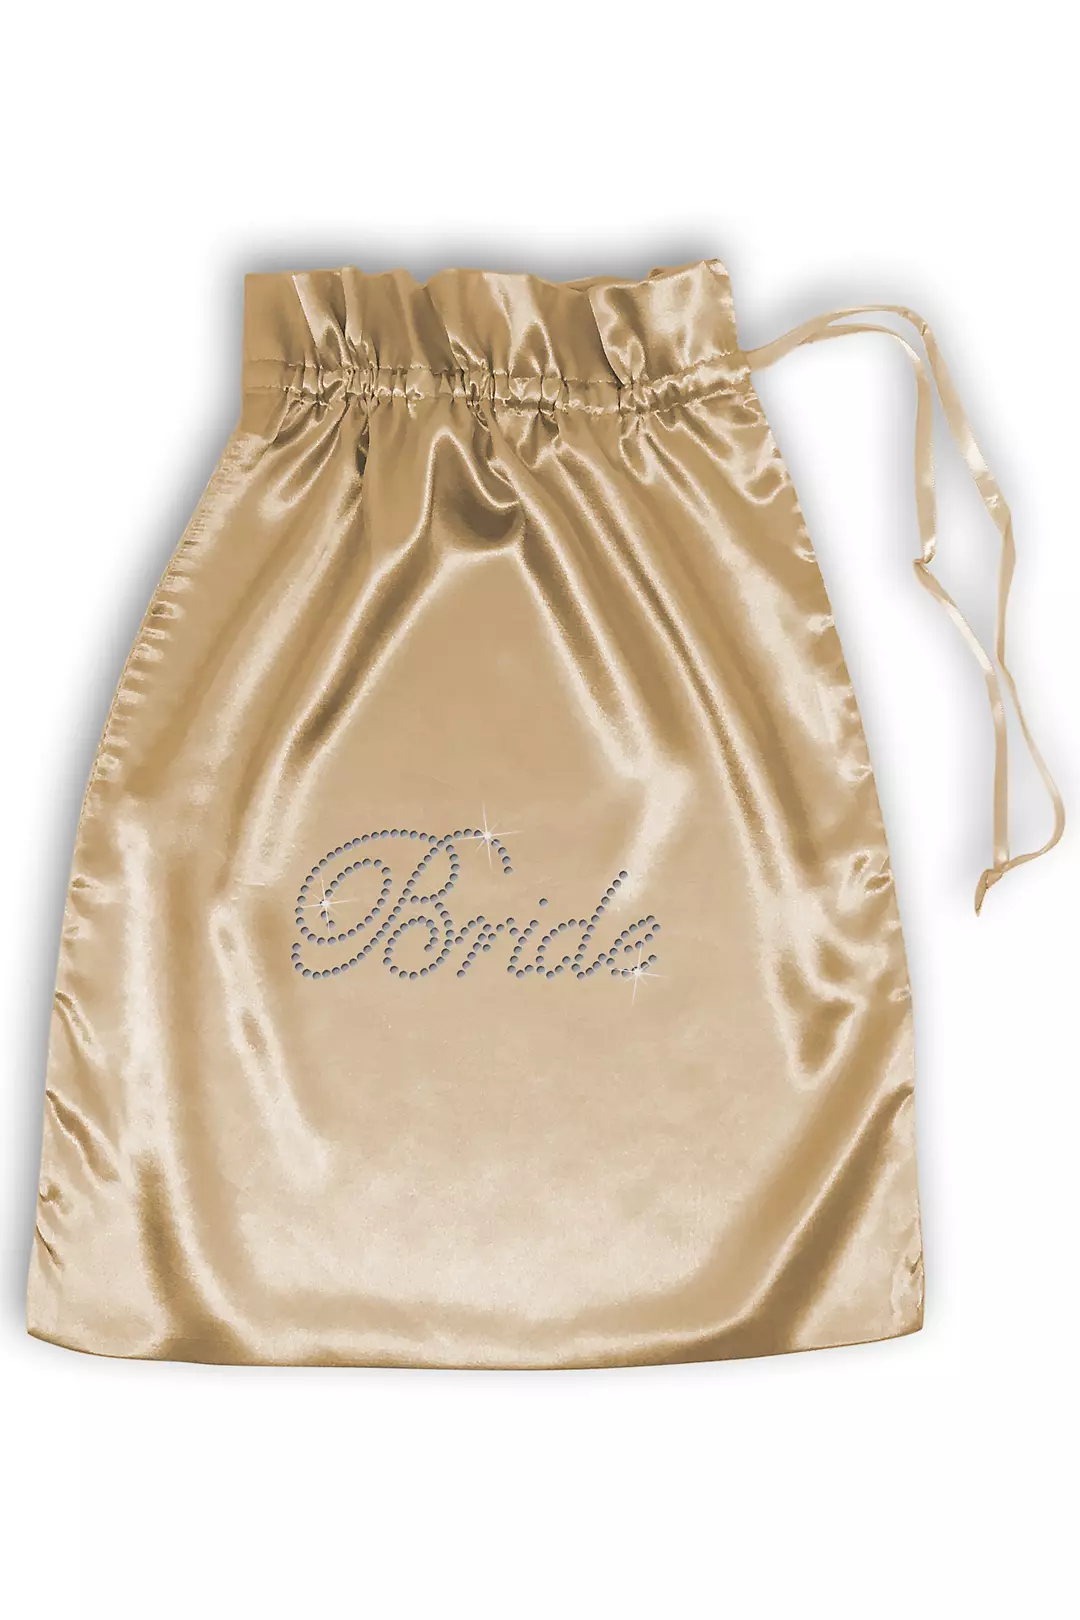 Rhinestone Bride Satin Bag Image